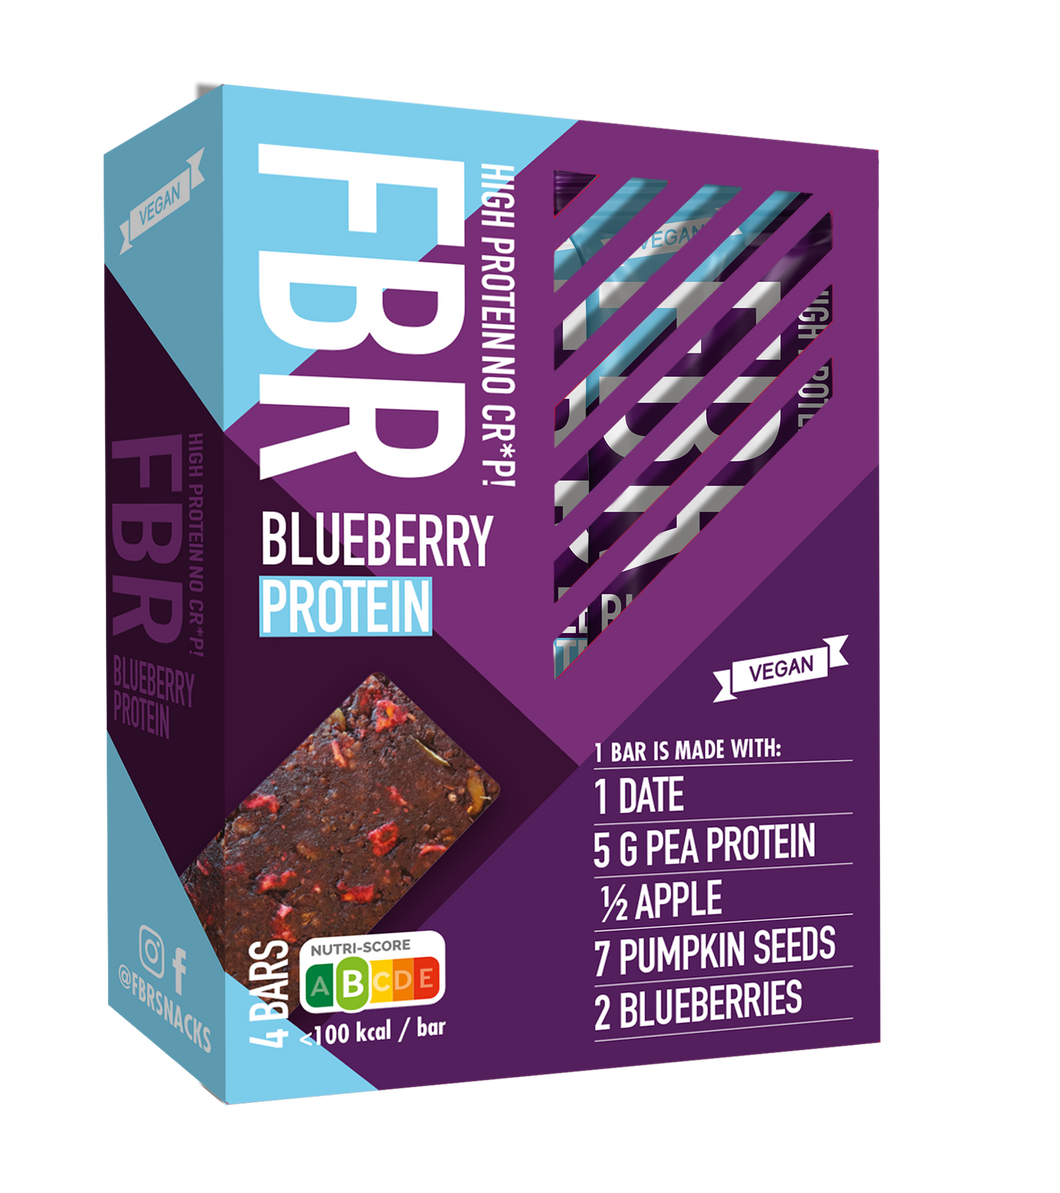 FBR Blueberry Protein